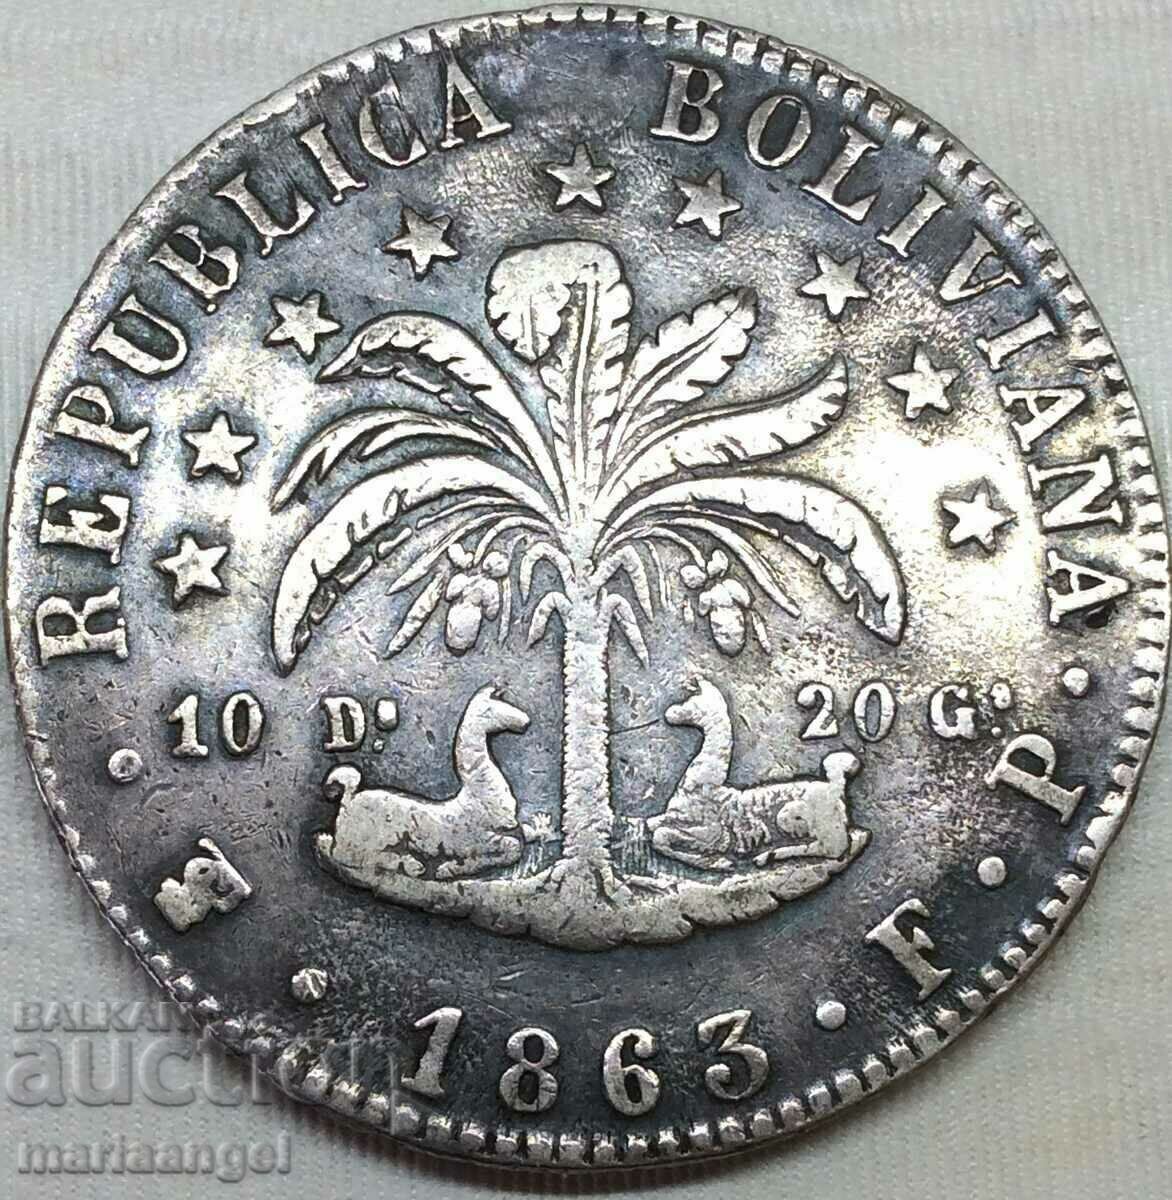 Bolivia 1863 8 sol Taler Simón Bolívar (1783-1830) silver